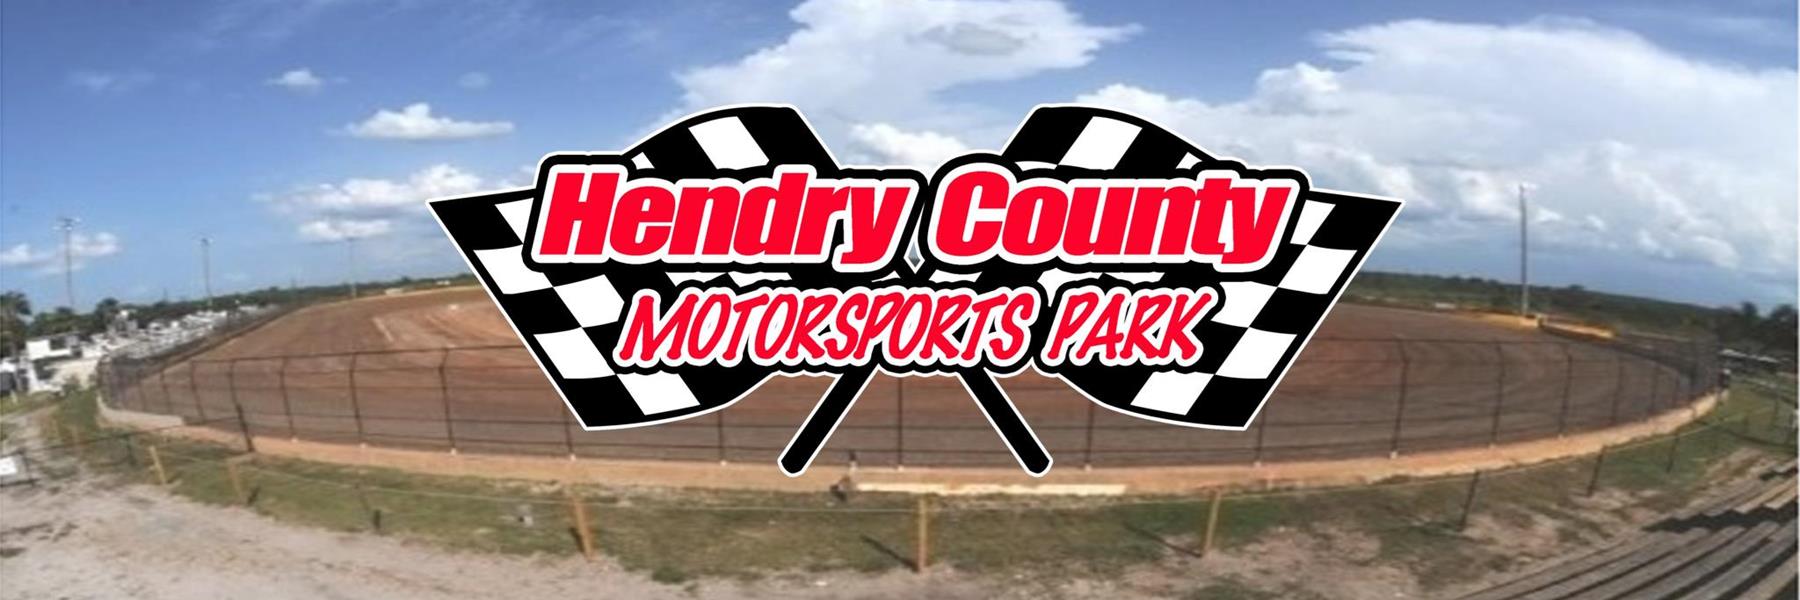 2/25/2023 - Hendry County Motorsports Park